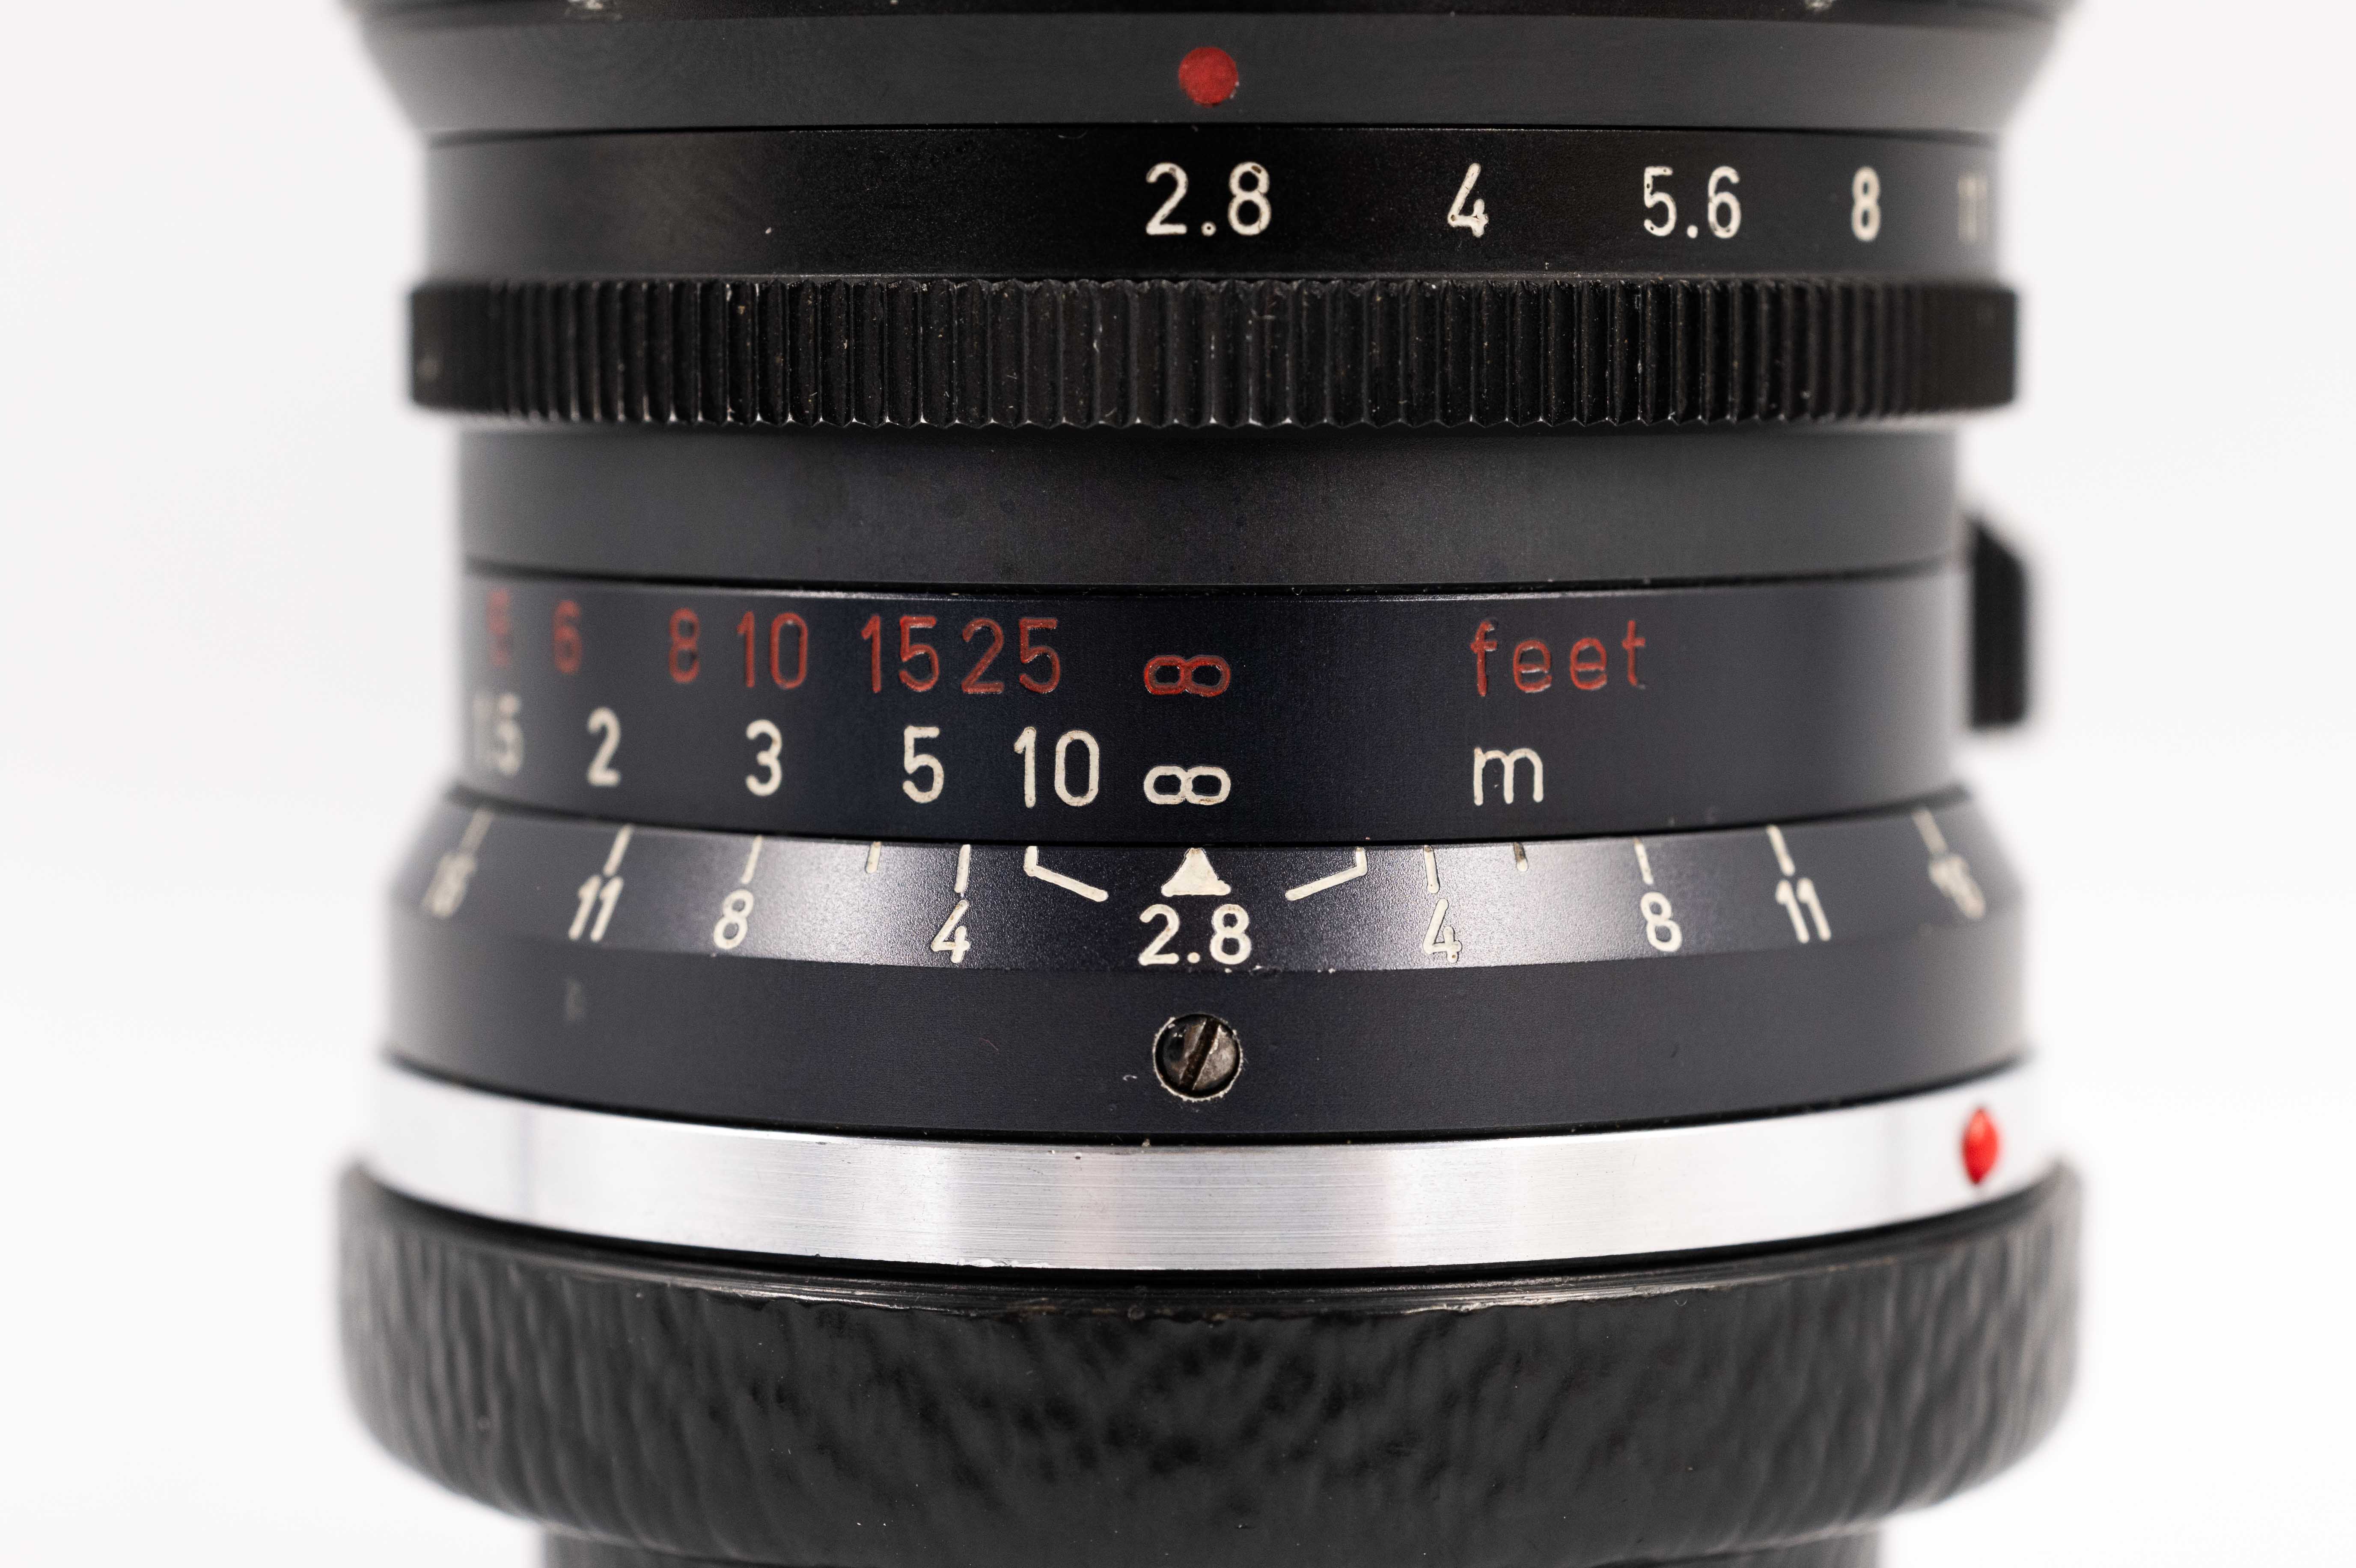 Leica Elmarit-M 28mm f/2.8 9 Element Red Scale 11801